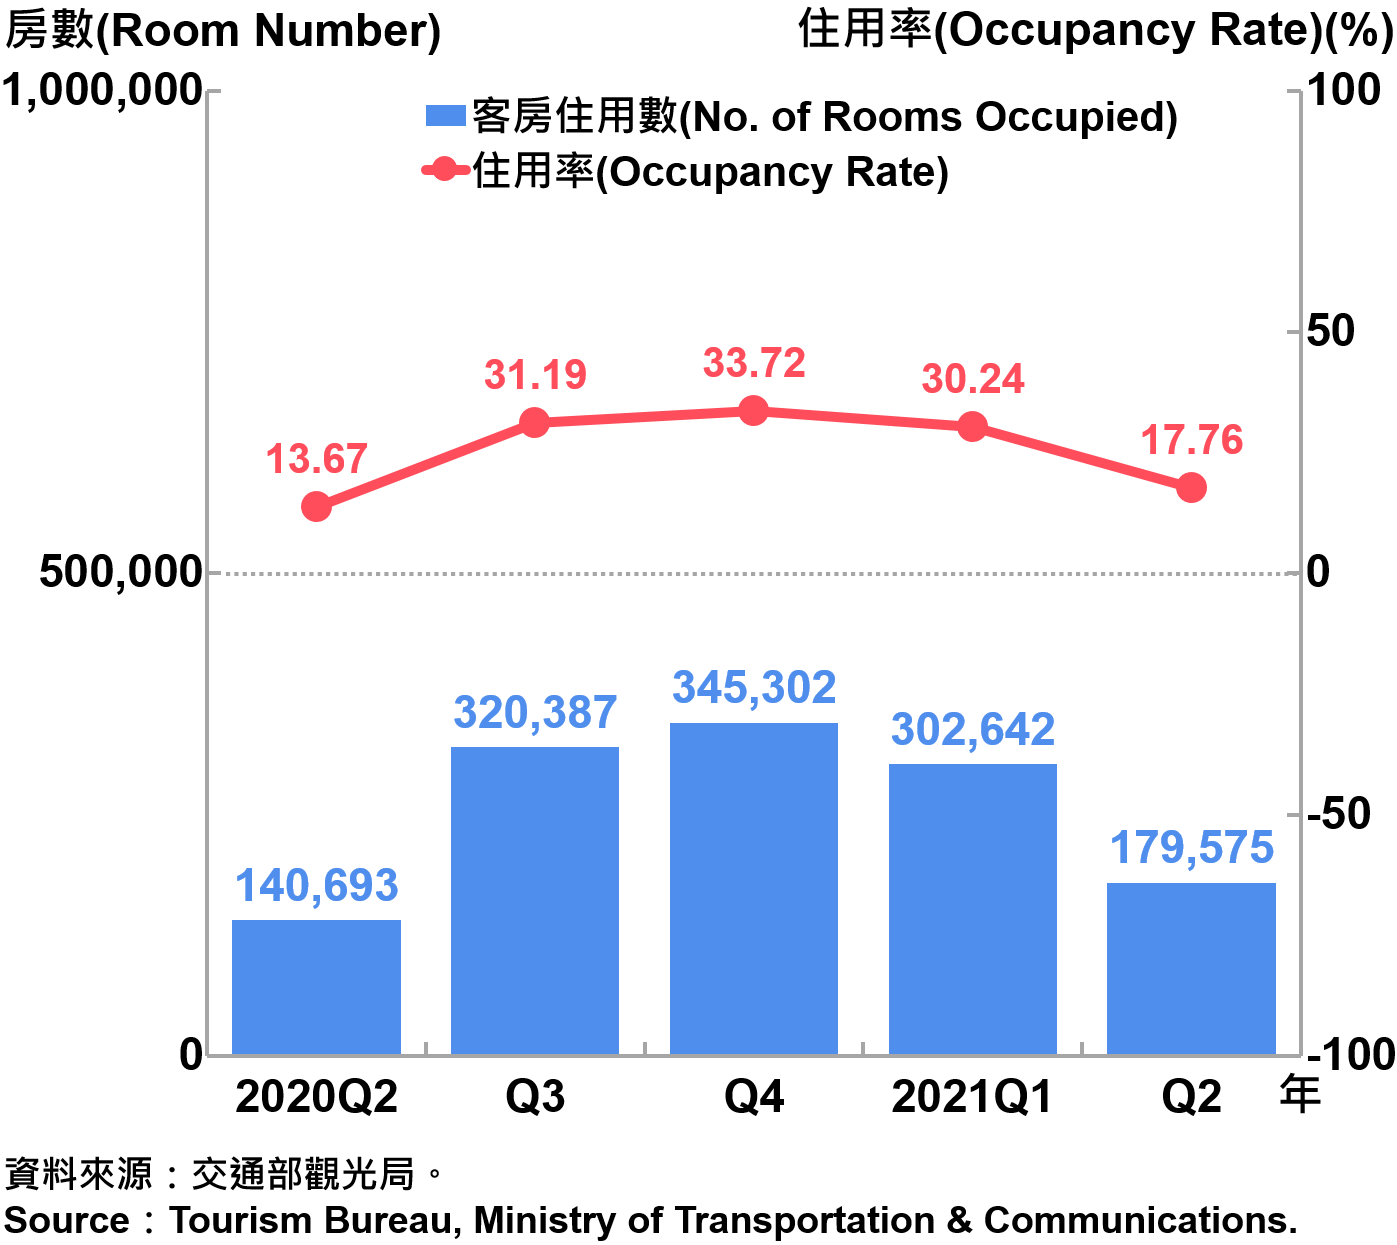 臺北市觀光旅館客房住用率統計—2021Q2 Occupancy Rate on Tourist Hotel Operations in Taipei City—2021Q2